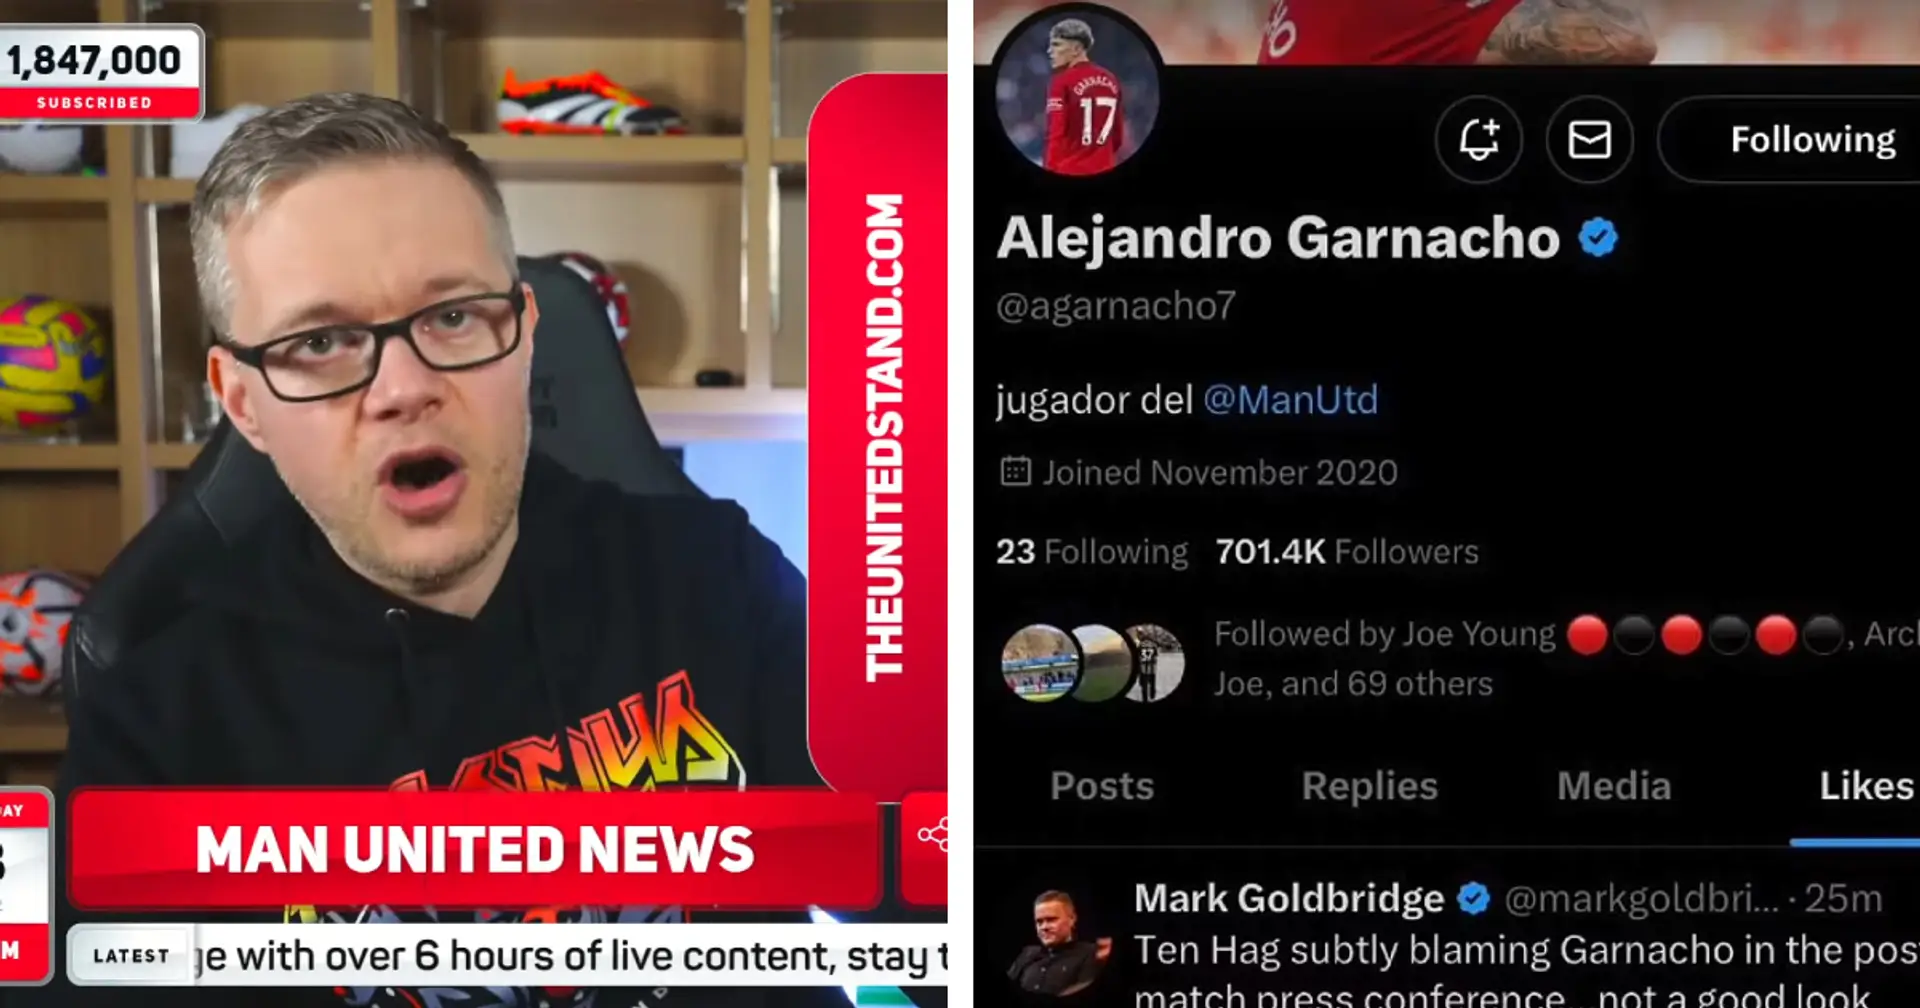 Garnacho likes Mark Goldbridge's post criticising Ten Hag — YouTuber reacts